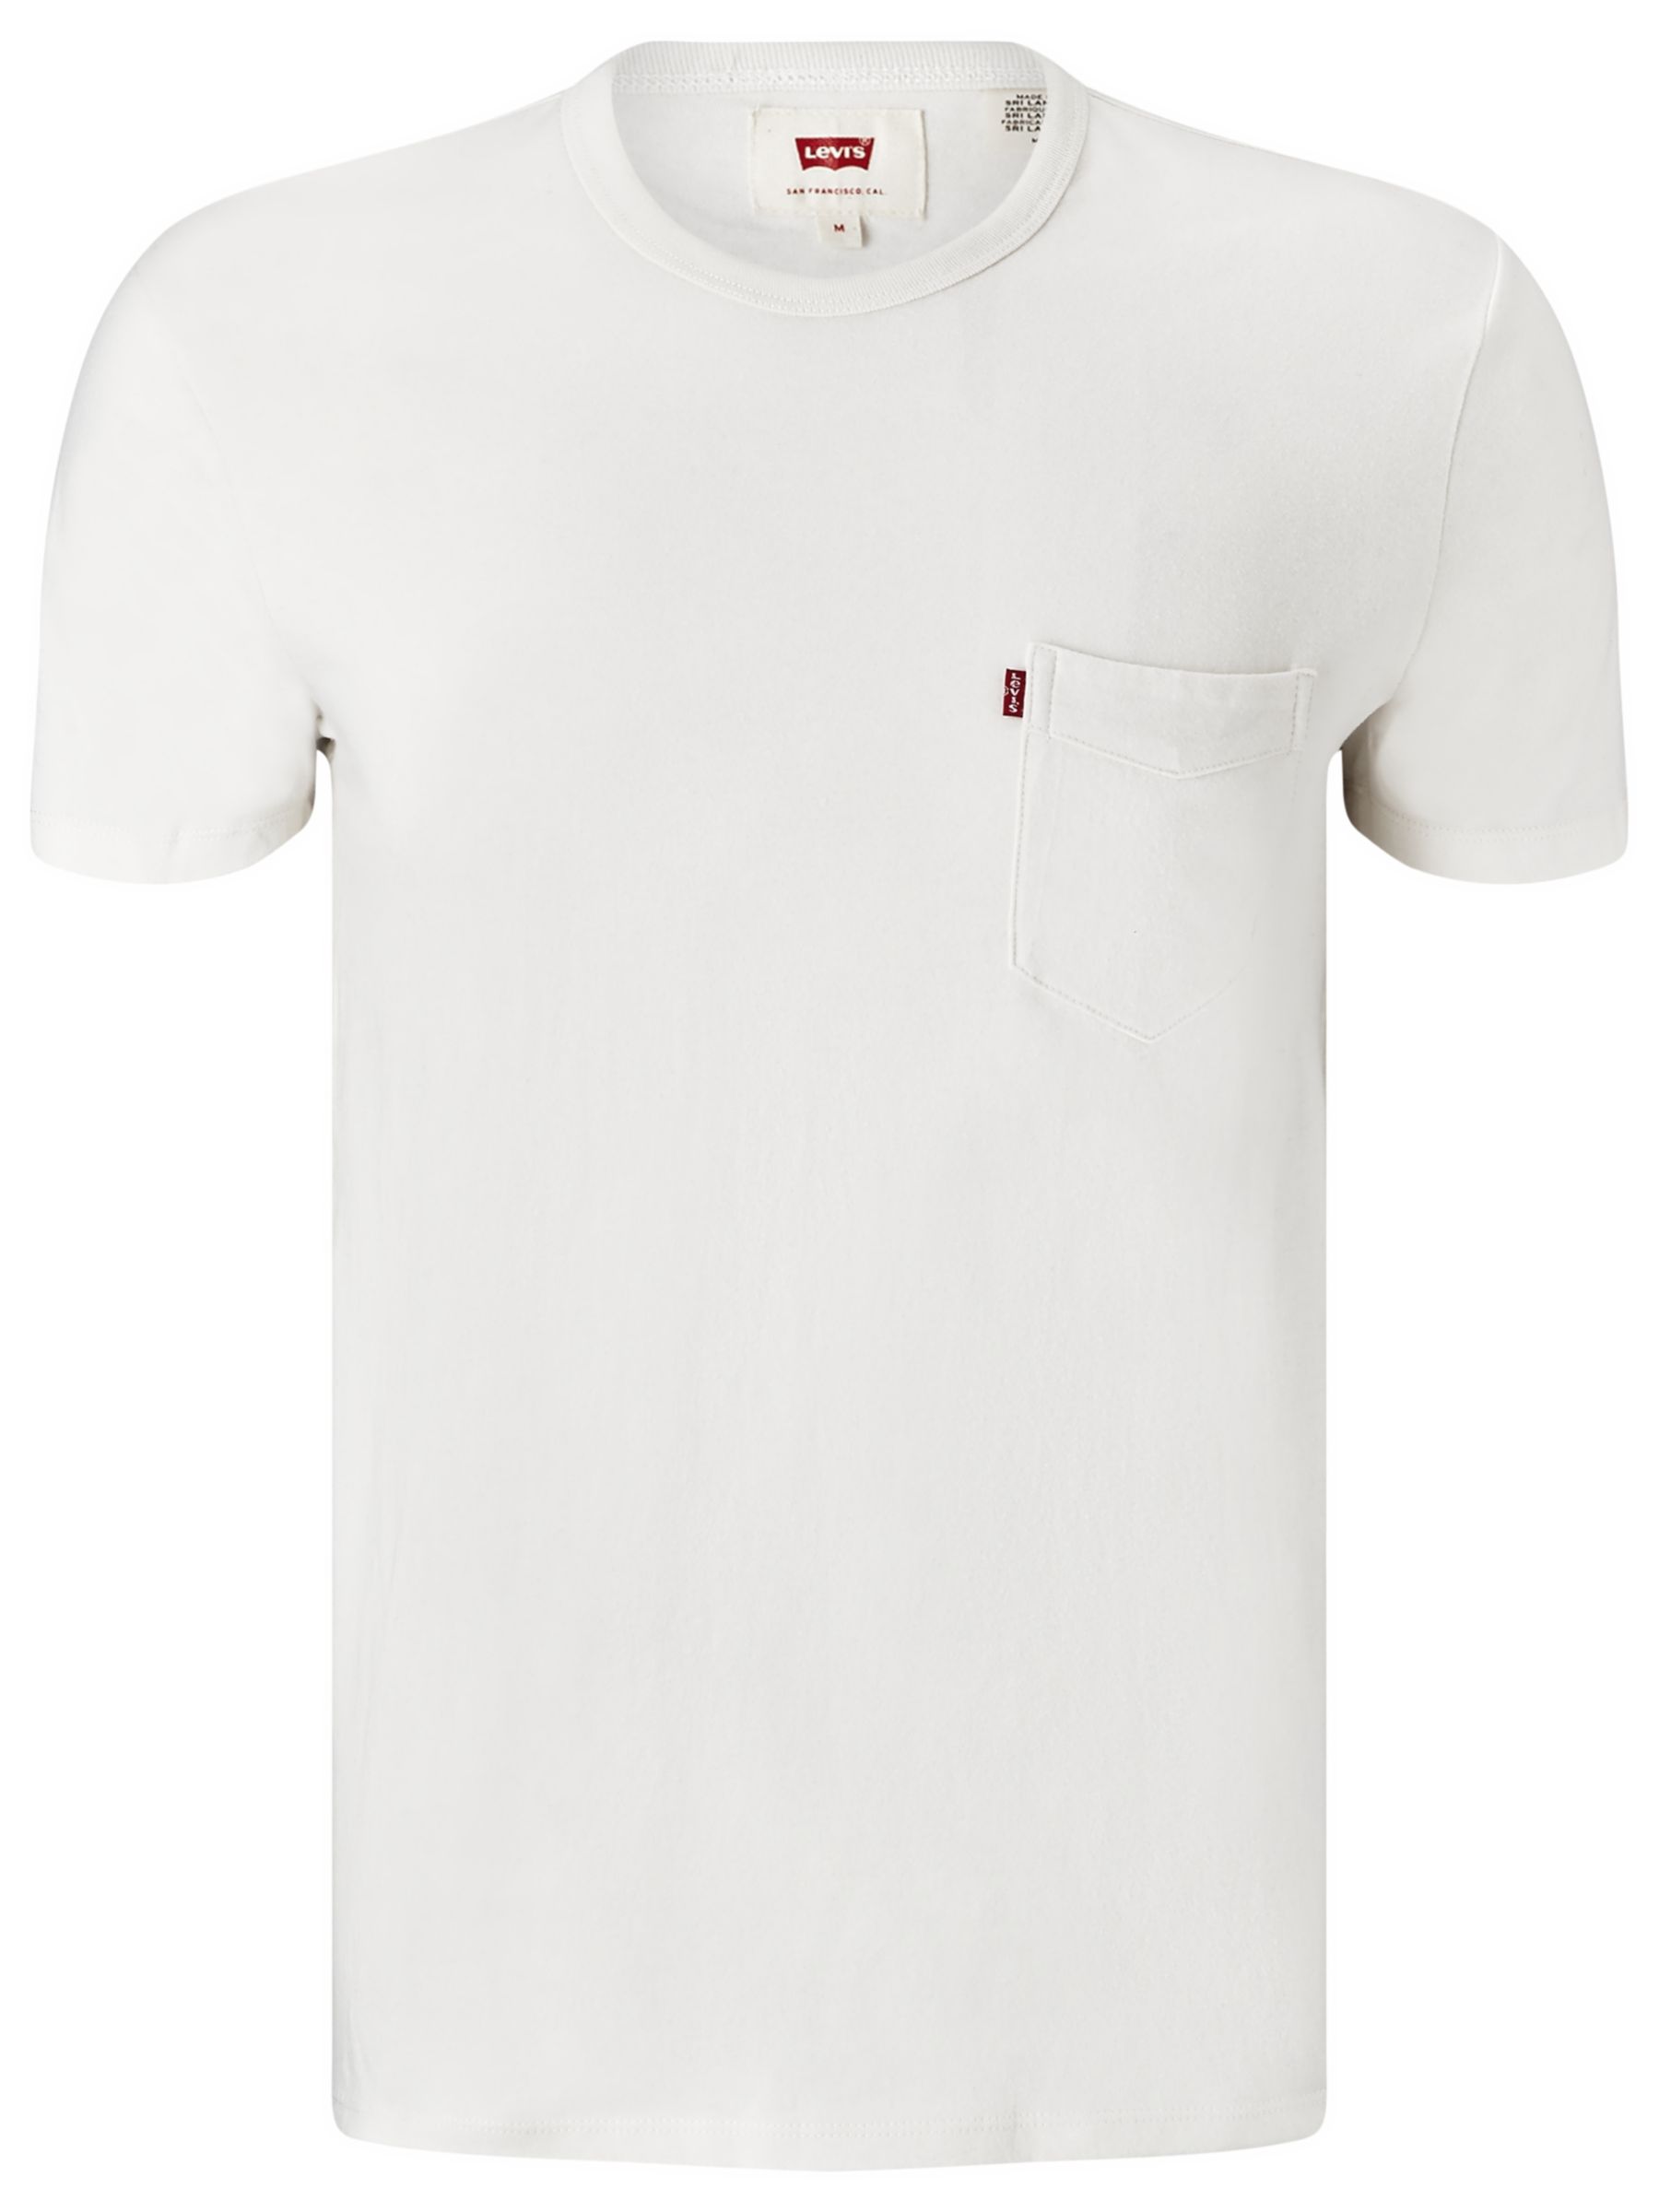 levis white pocket t shirt